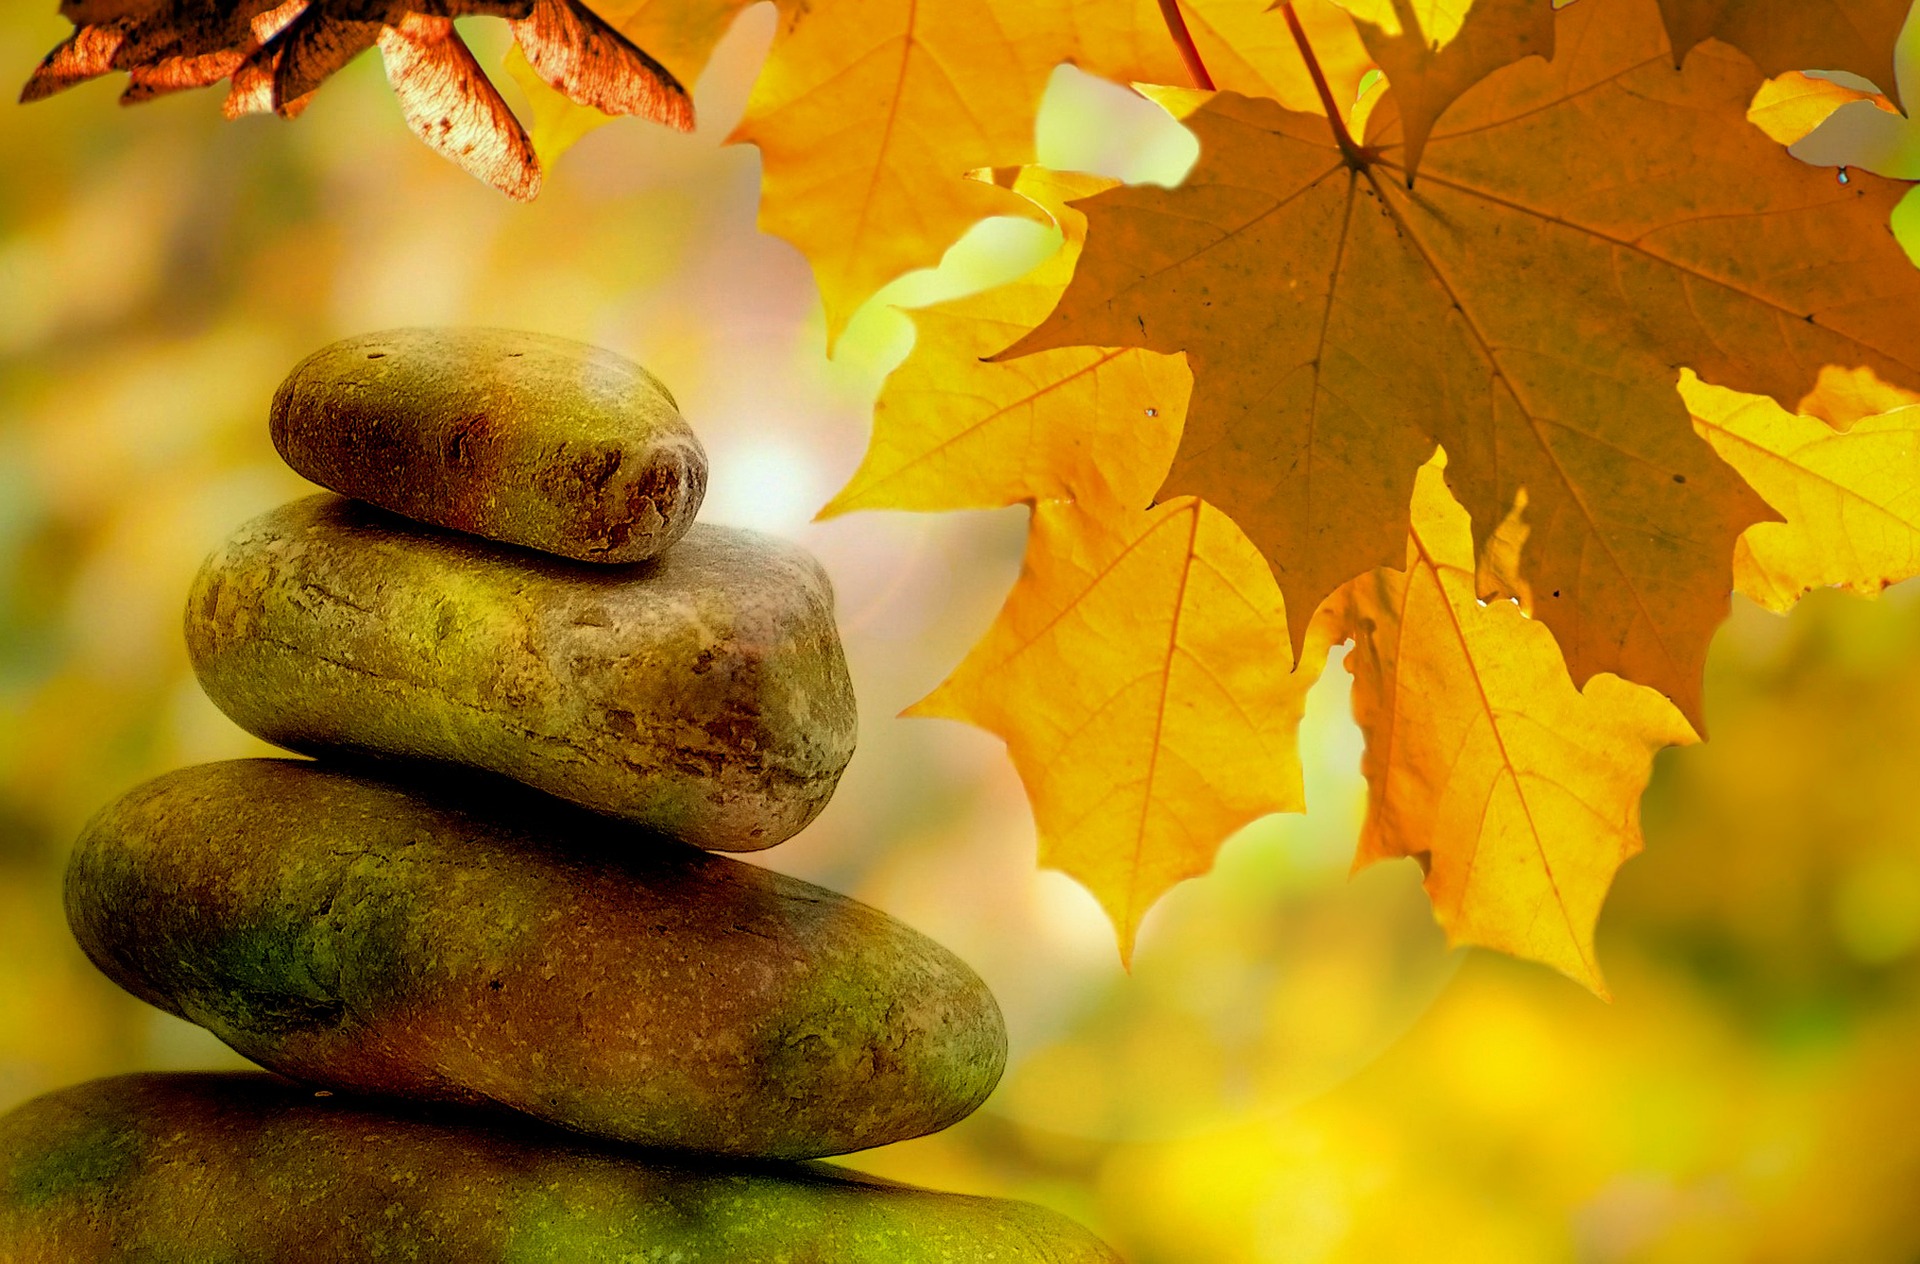 Rocks in balance to show the message of Qigong - harmony, balance and health